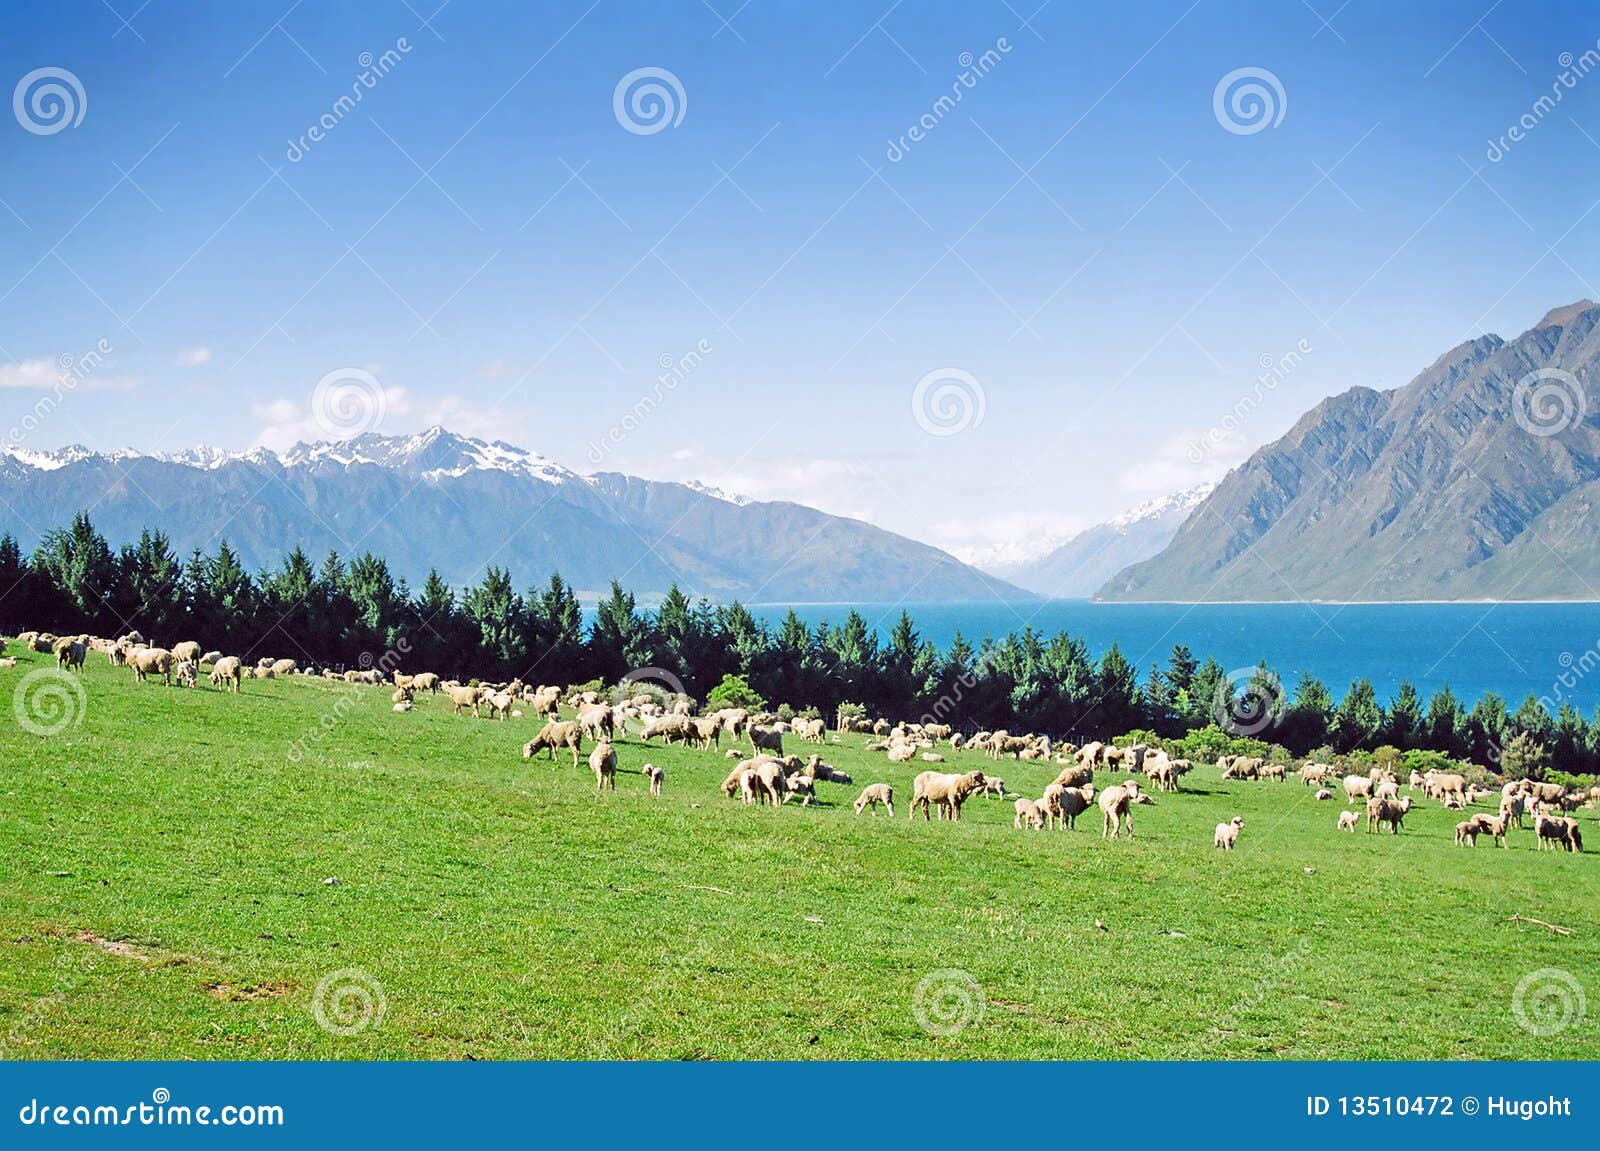 new zealand sheep grazing